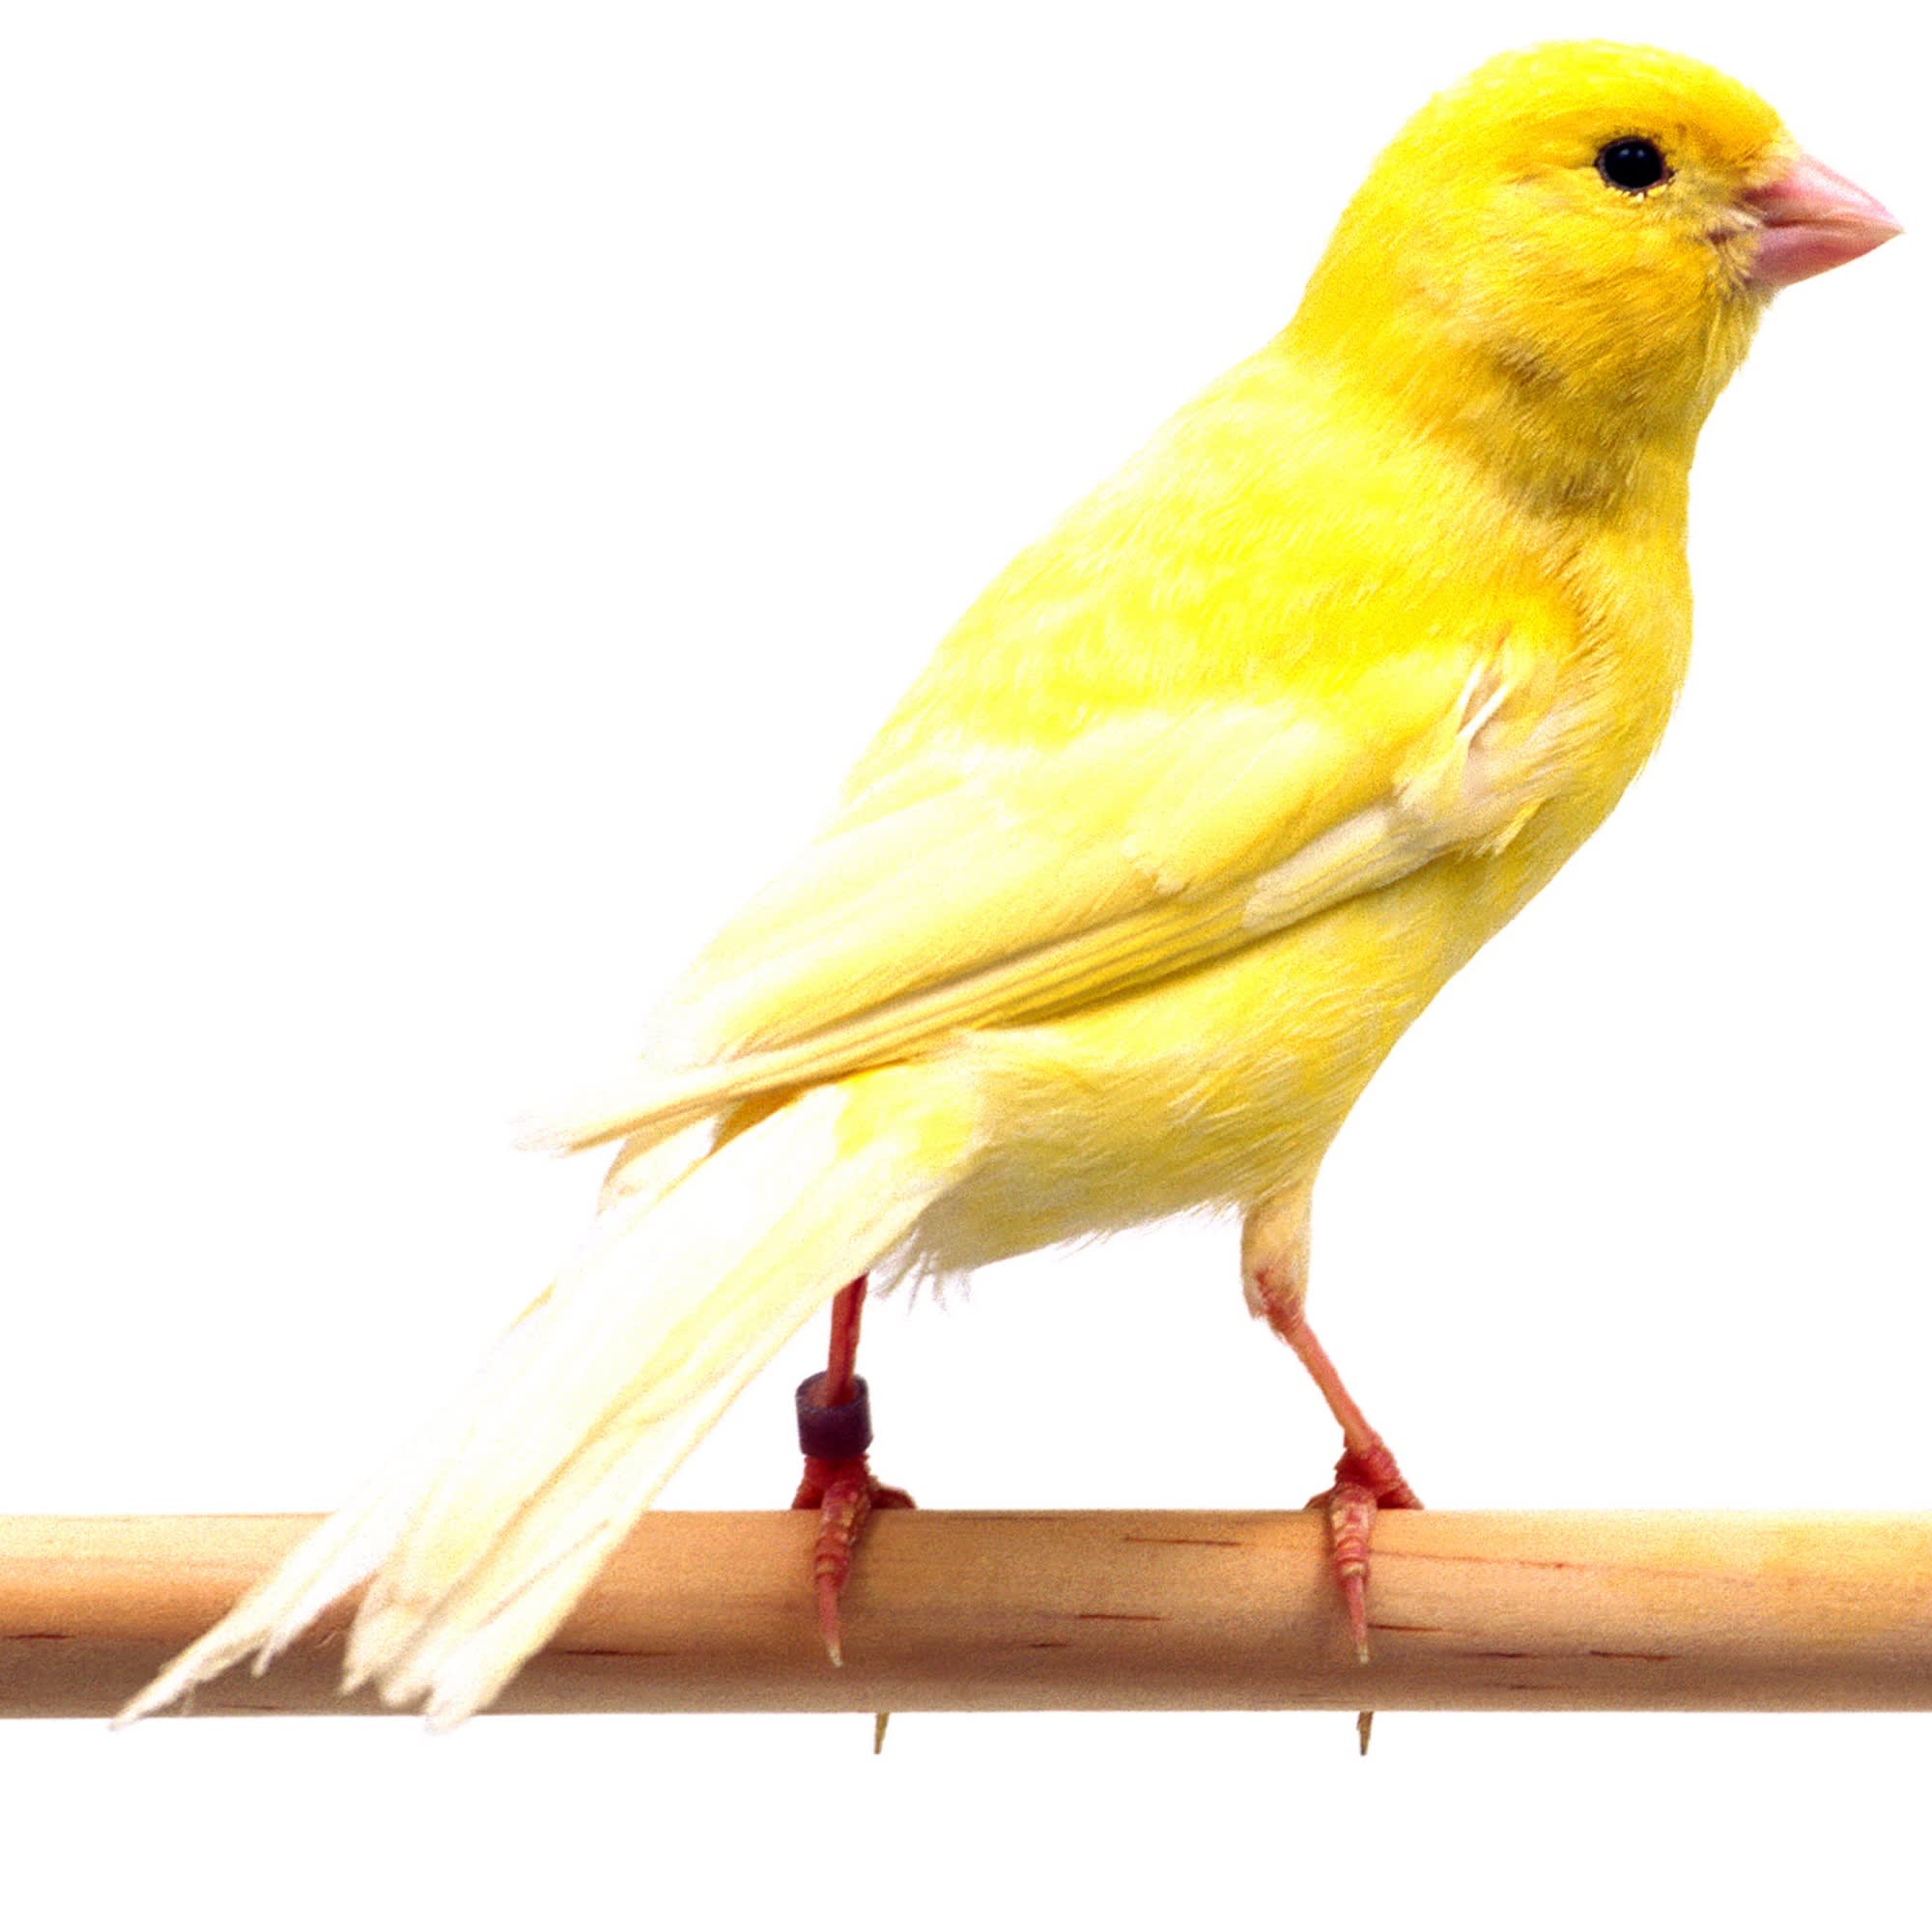 Yellow Canary (Serinus canaria) | Petco